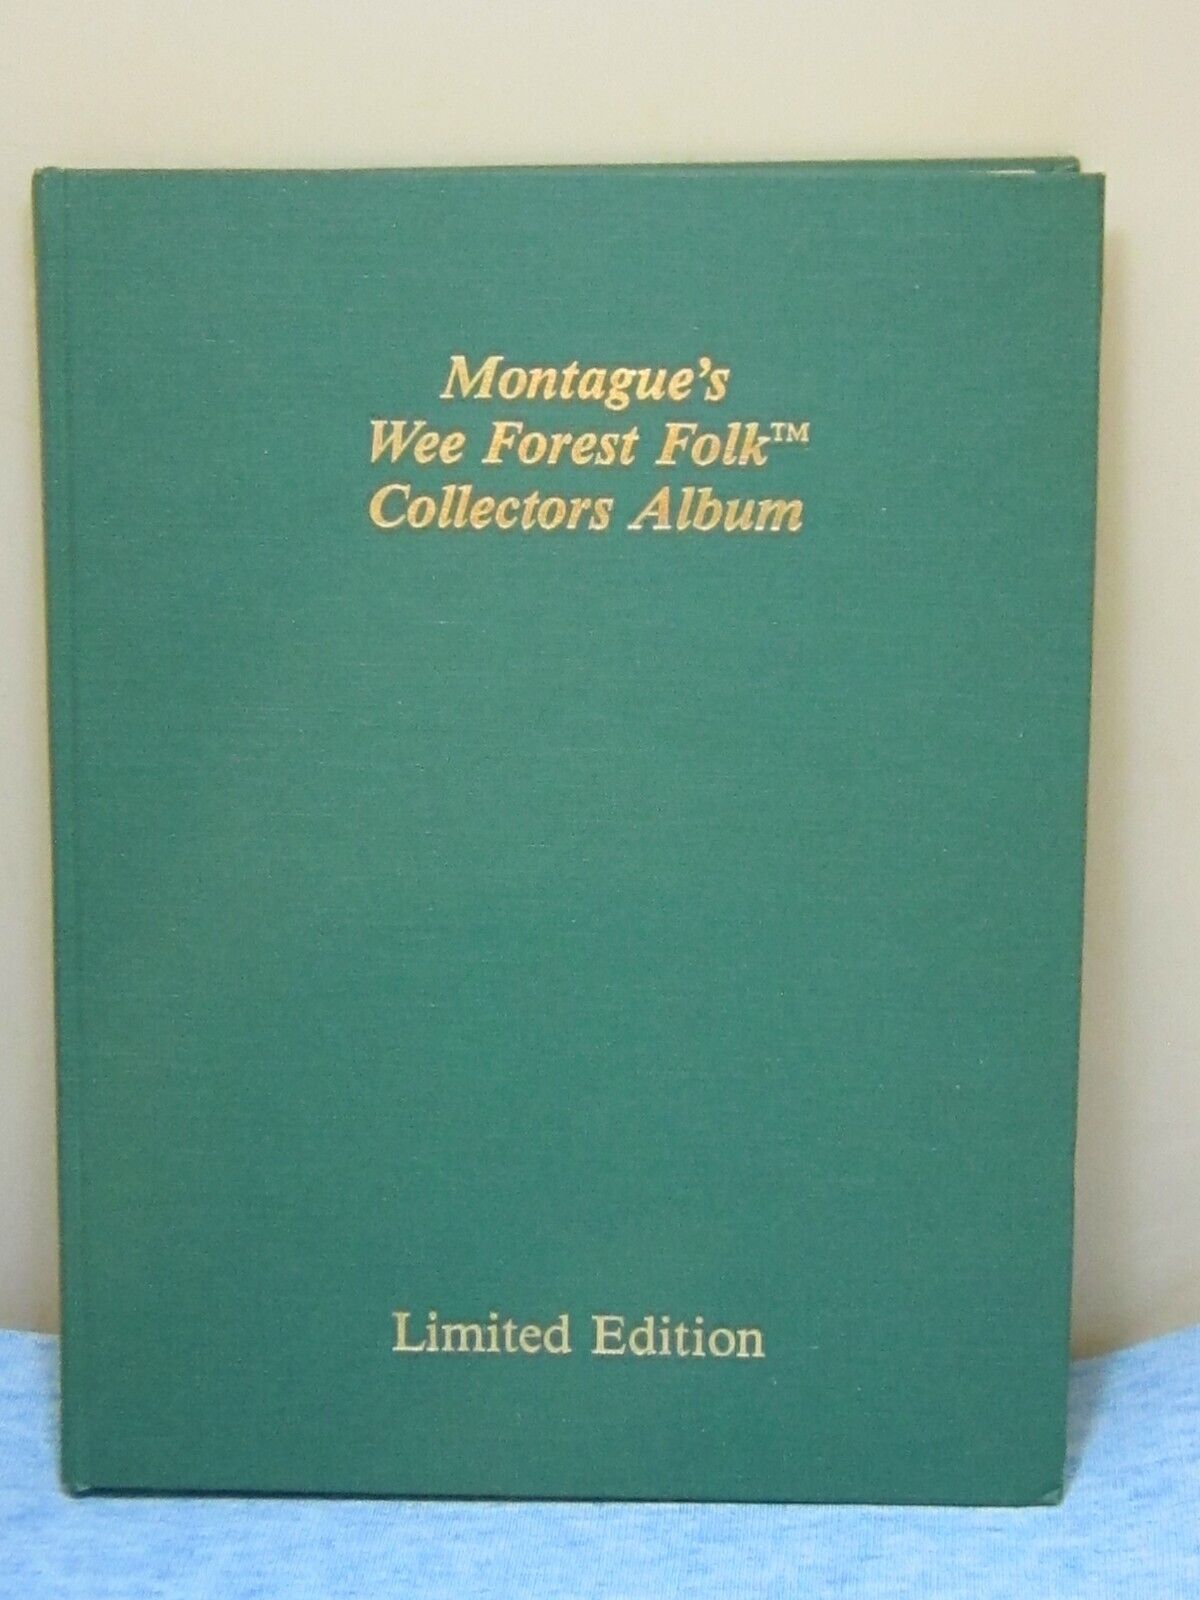 Wee Forest Folk Montague's Collectors Album RARE 1988 Ltd Ed #109/300 Price Book